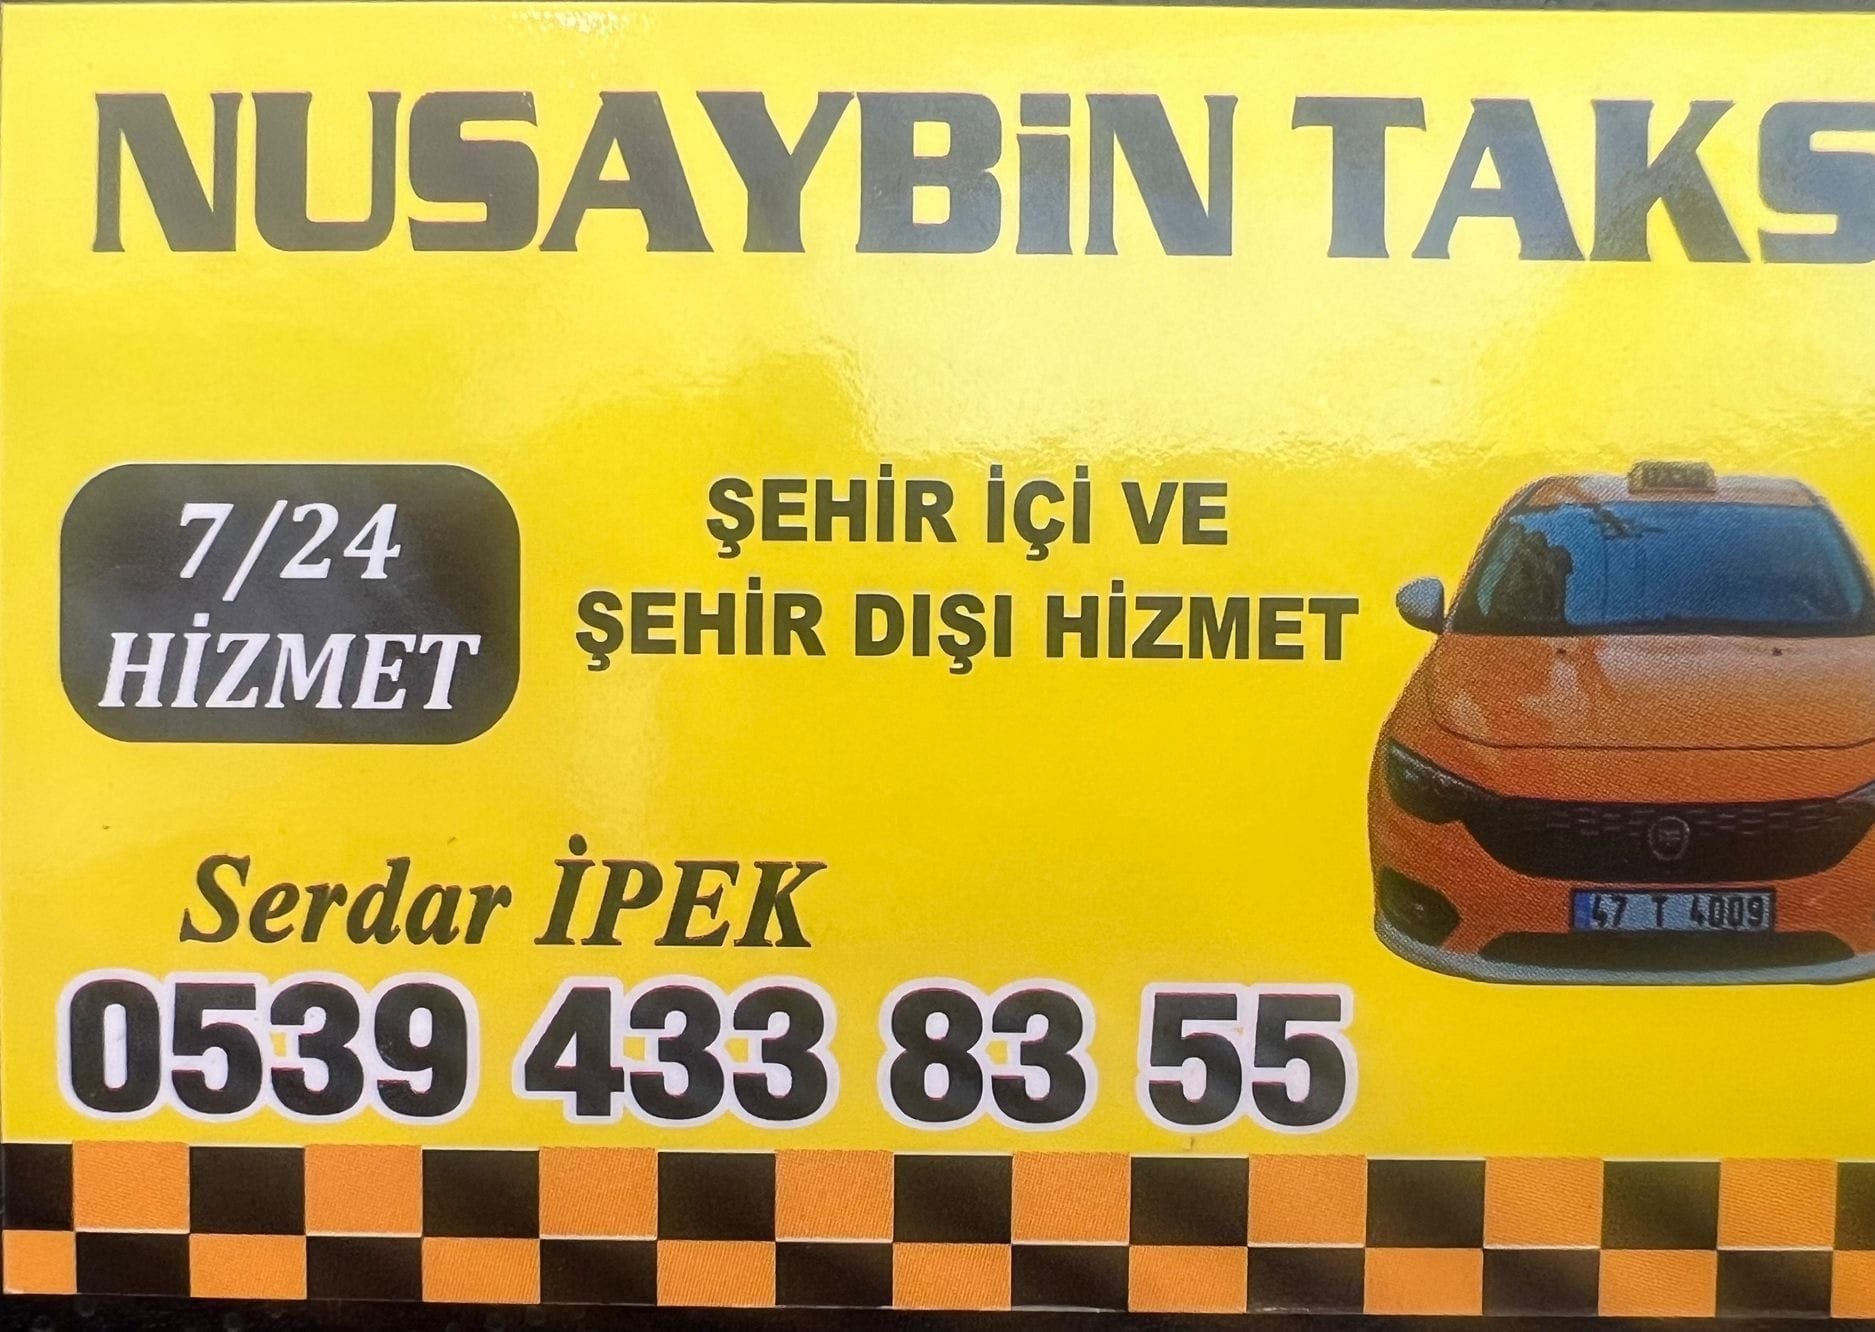 Nusaybin Taksi